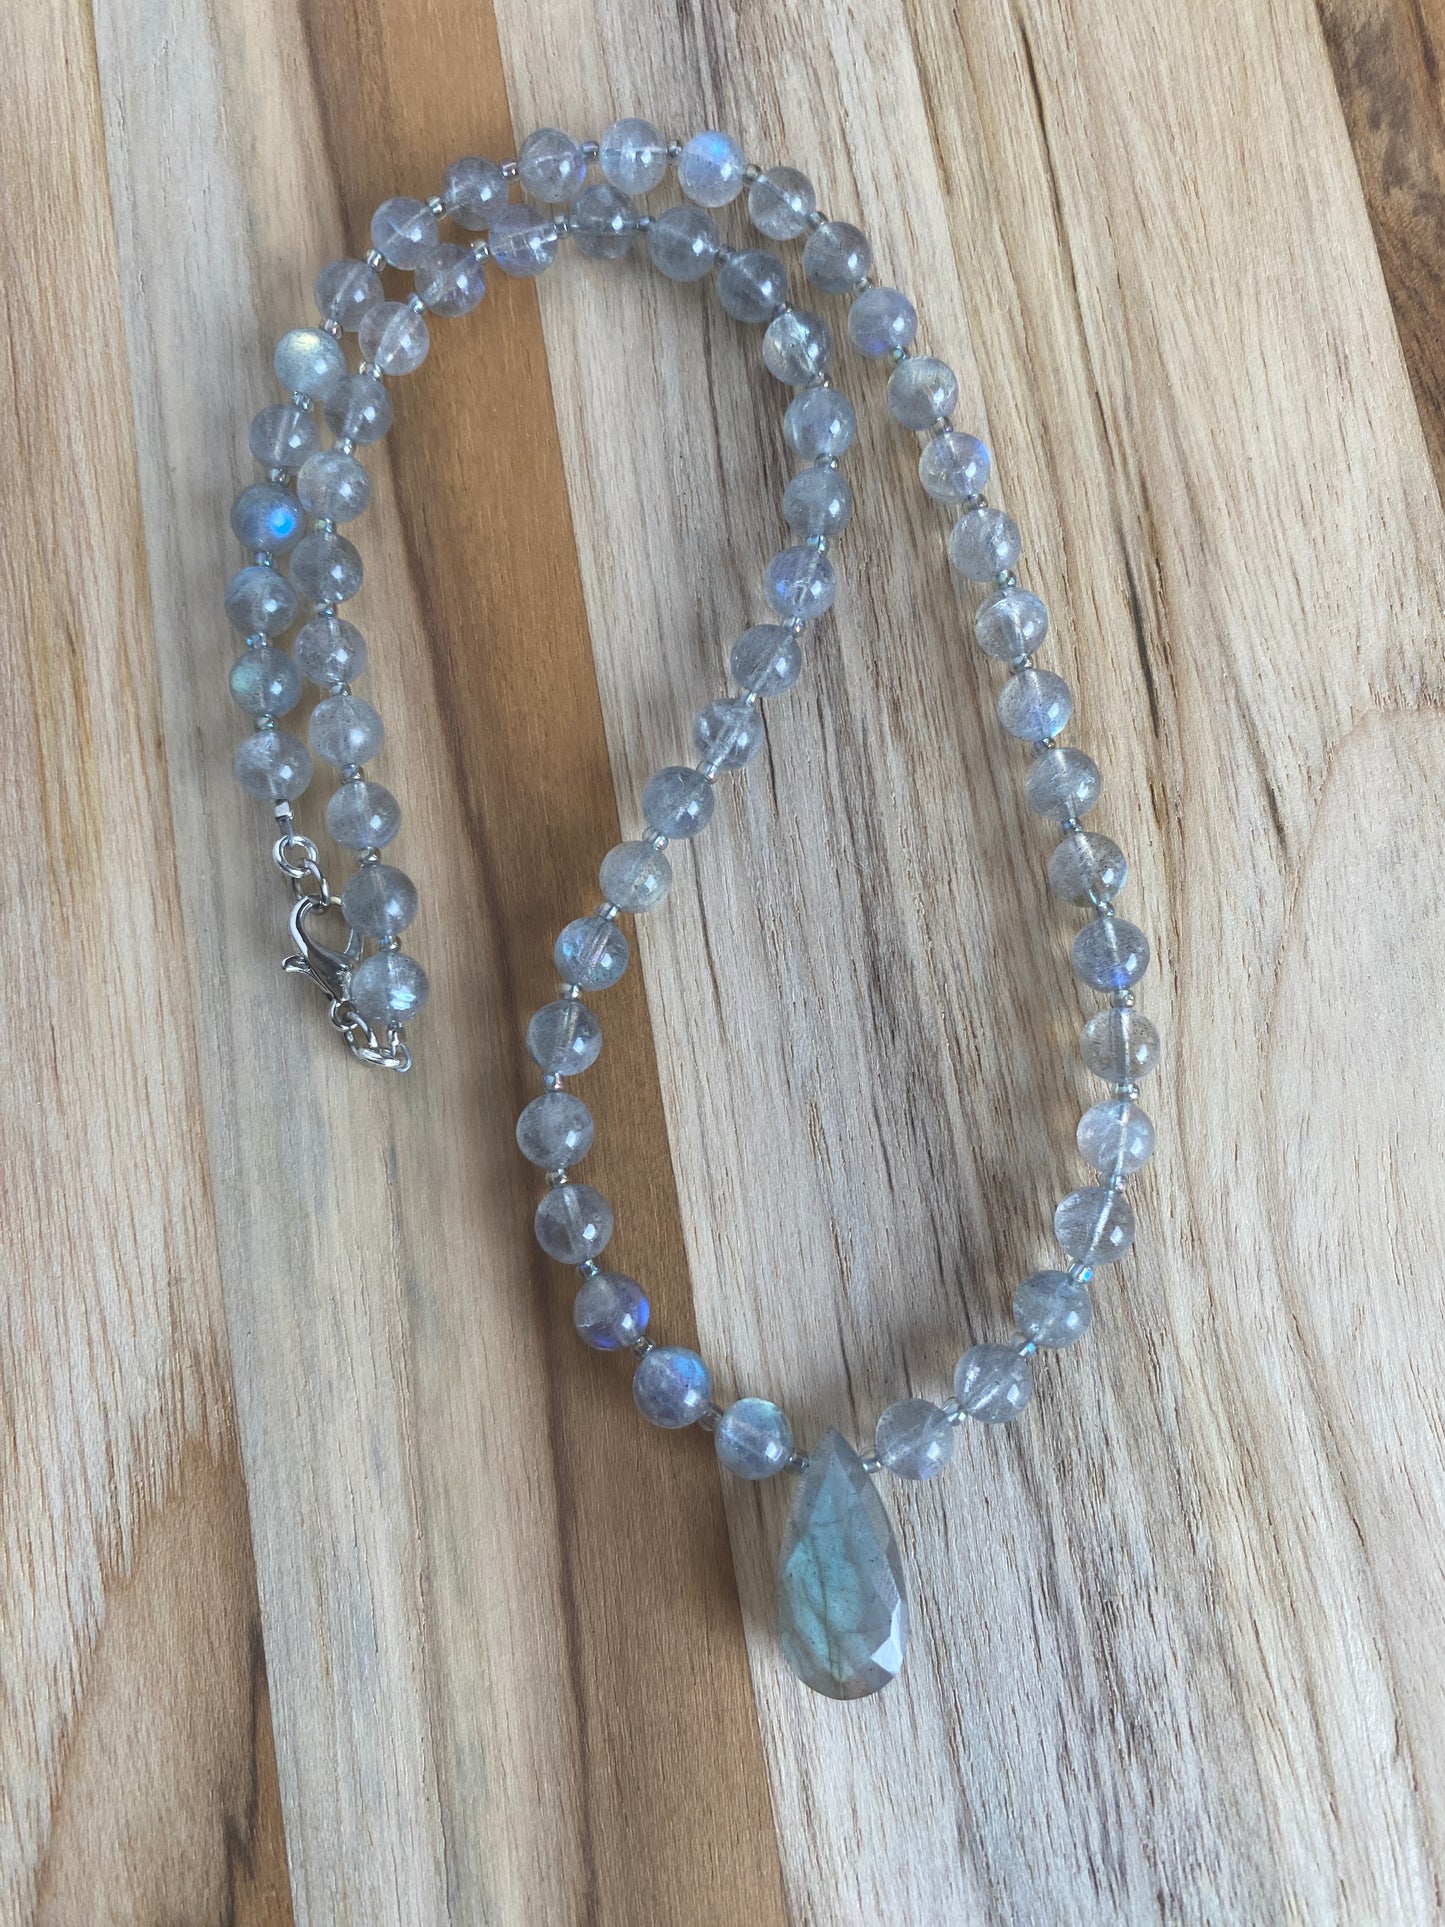 Labradorite Pendant Necklace with Labradorite Beads